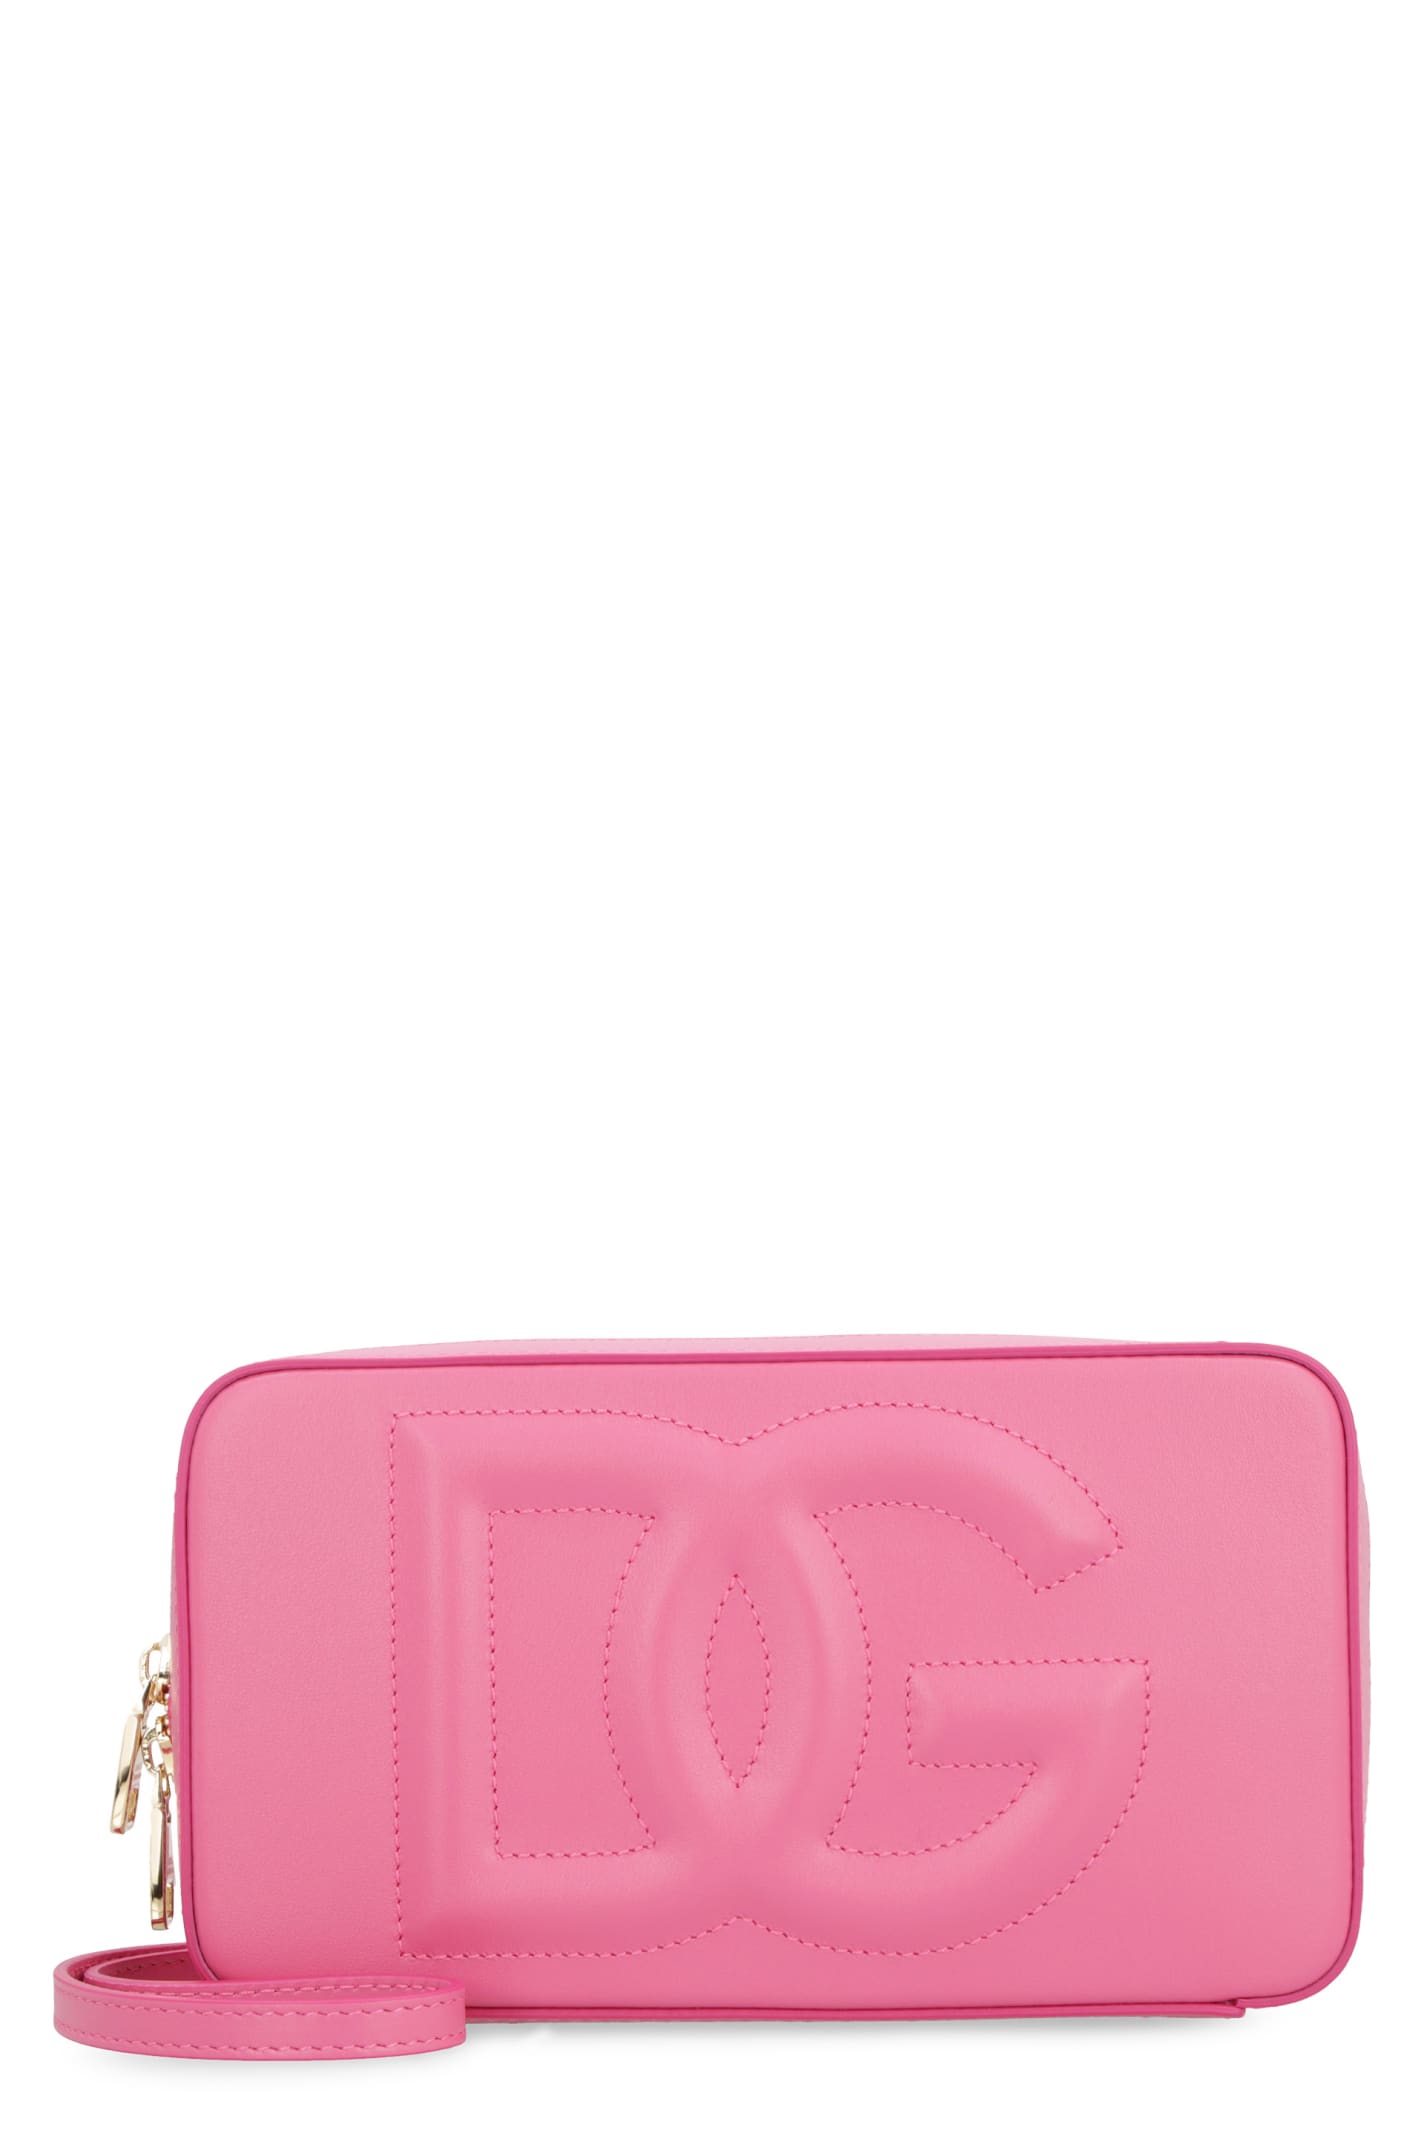 Dolce & Gabbana Dg Logo Leather Camera Bag